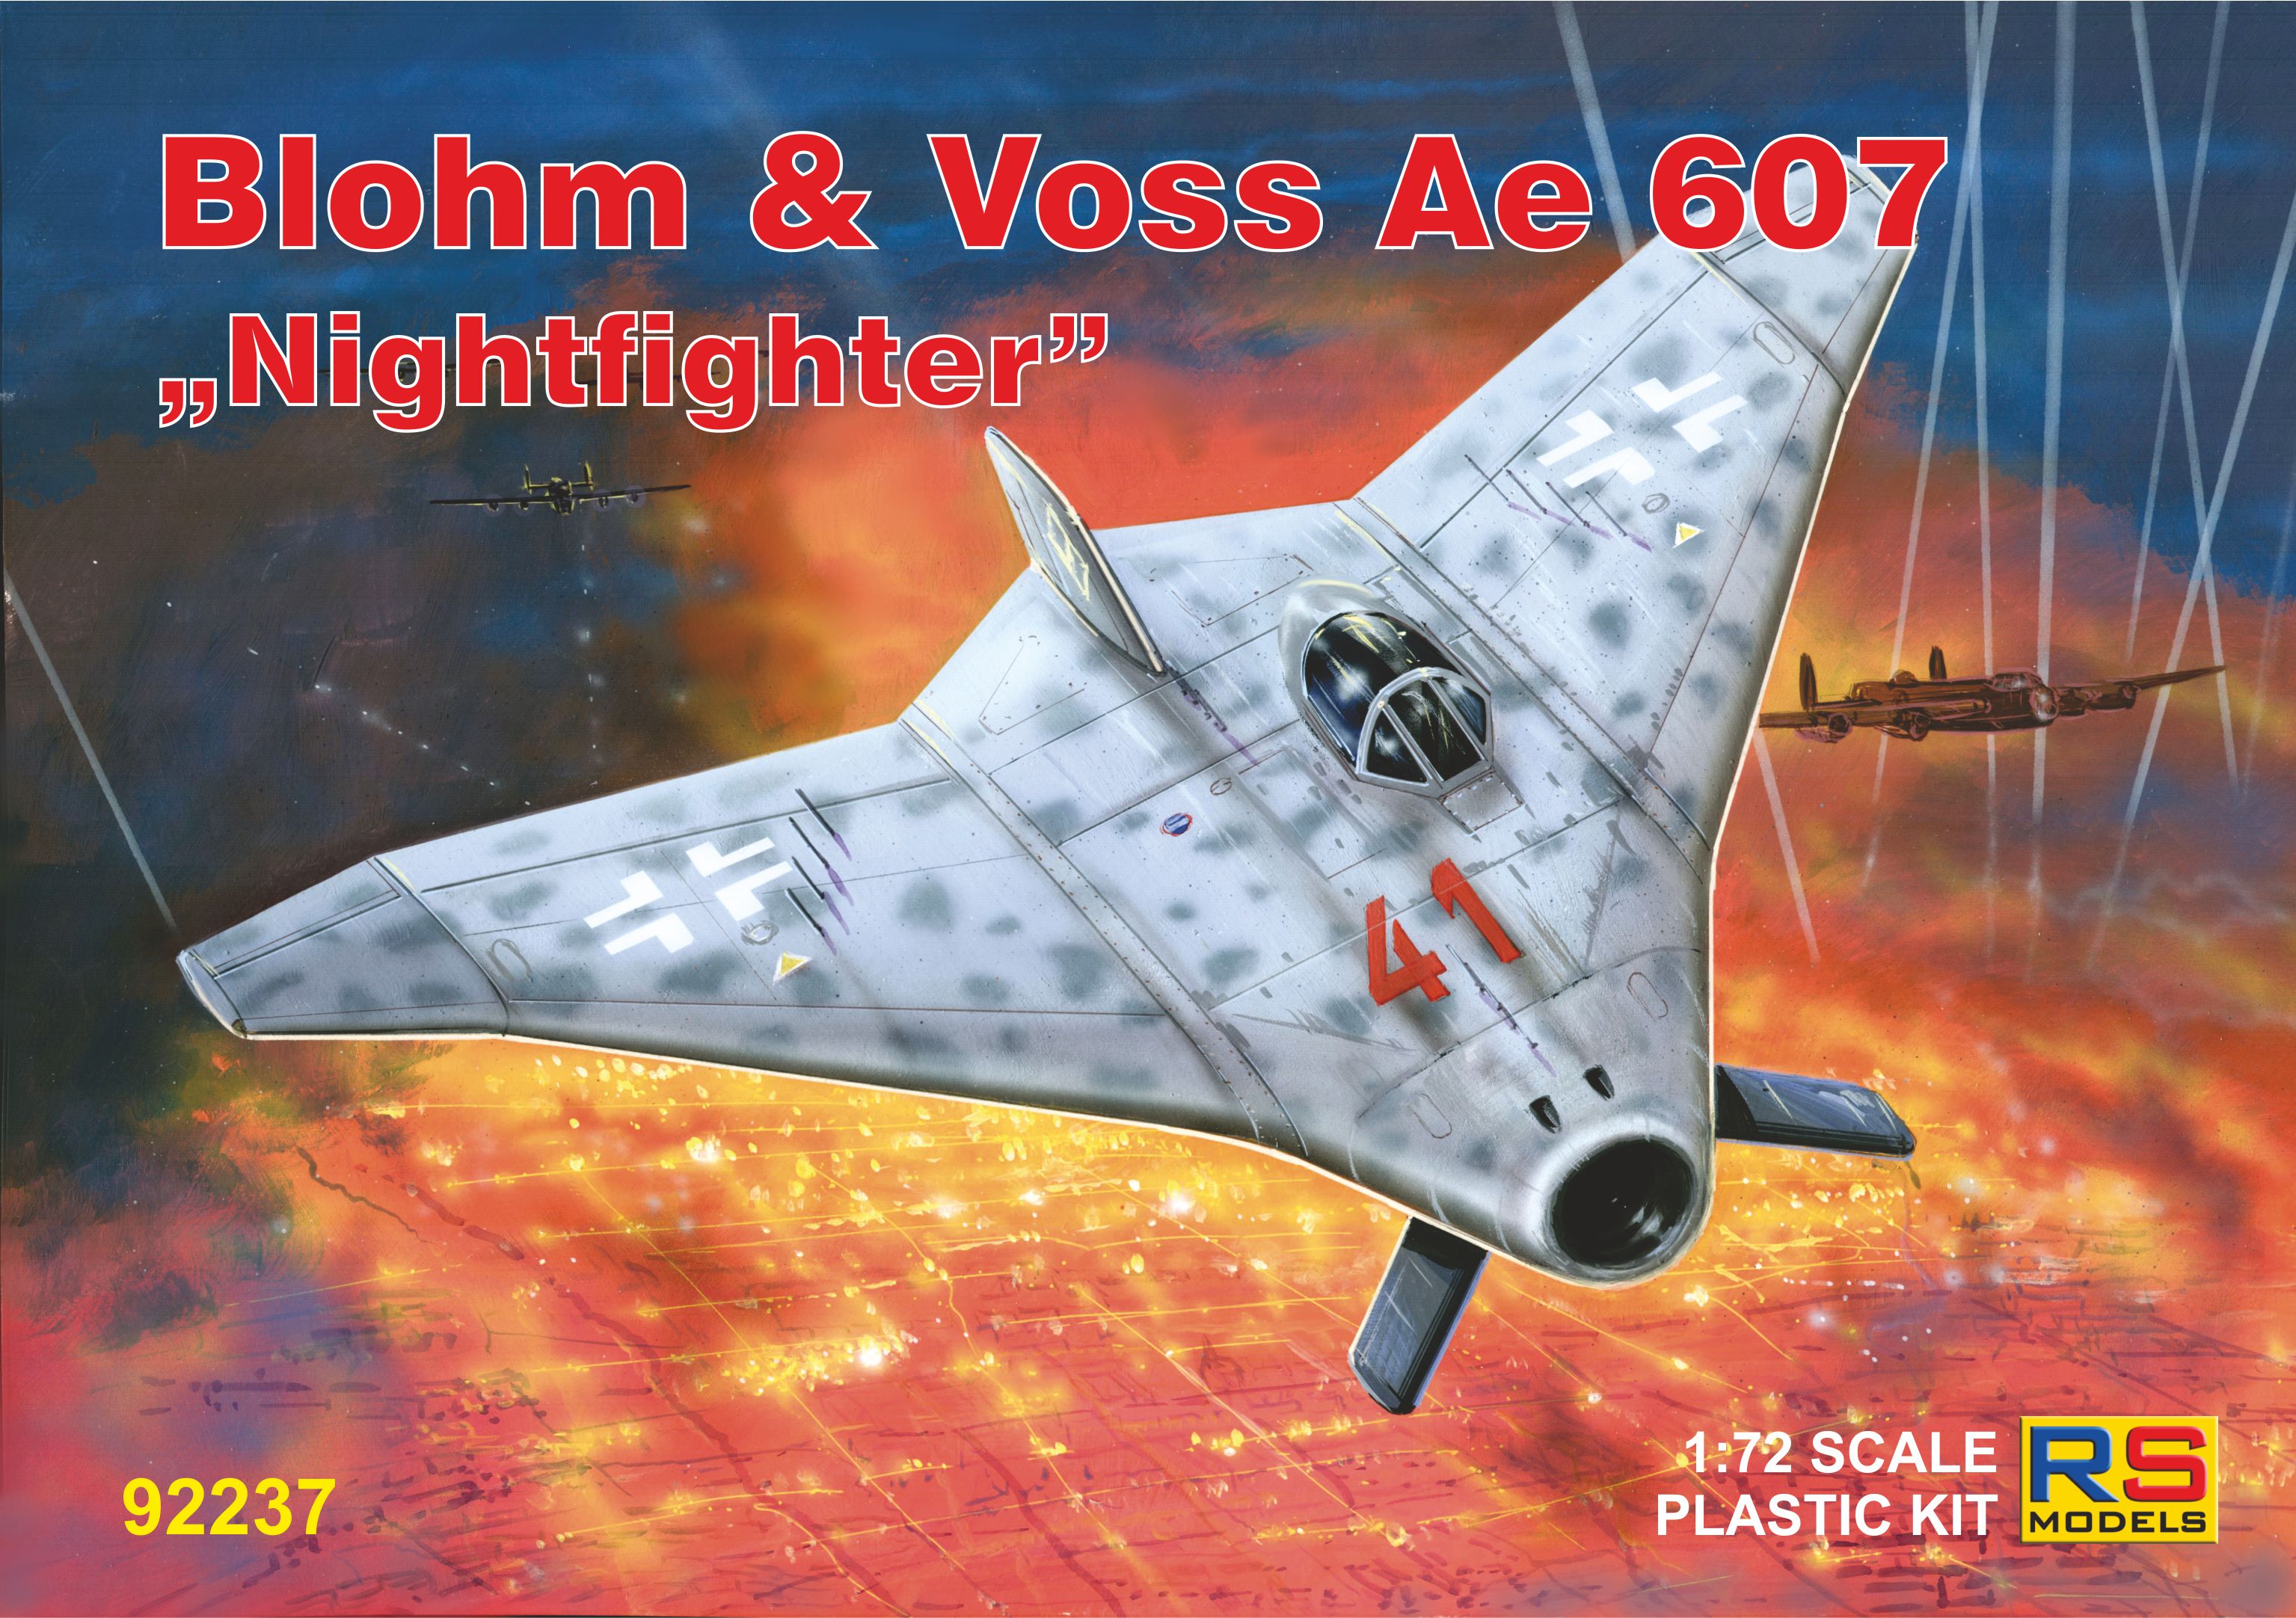 Blohm & Voss Ae 607 "Nightfighter"